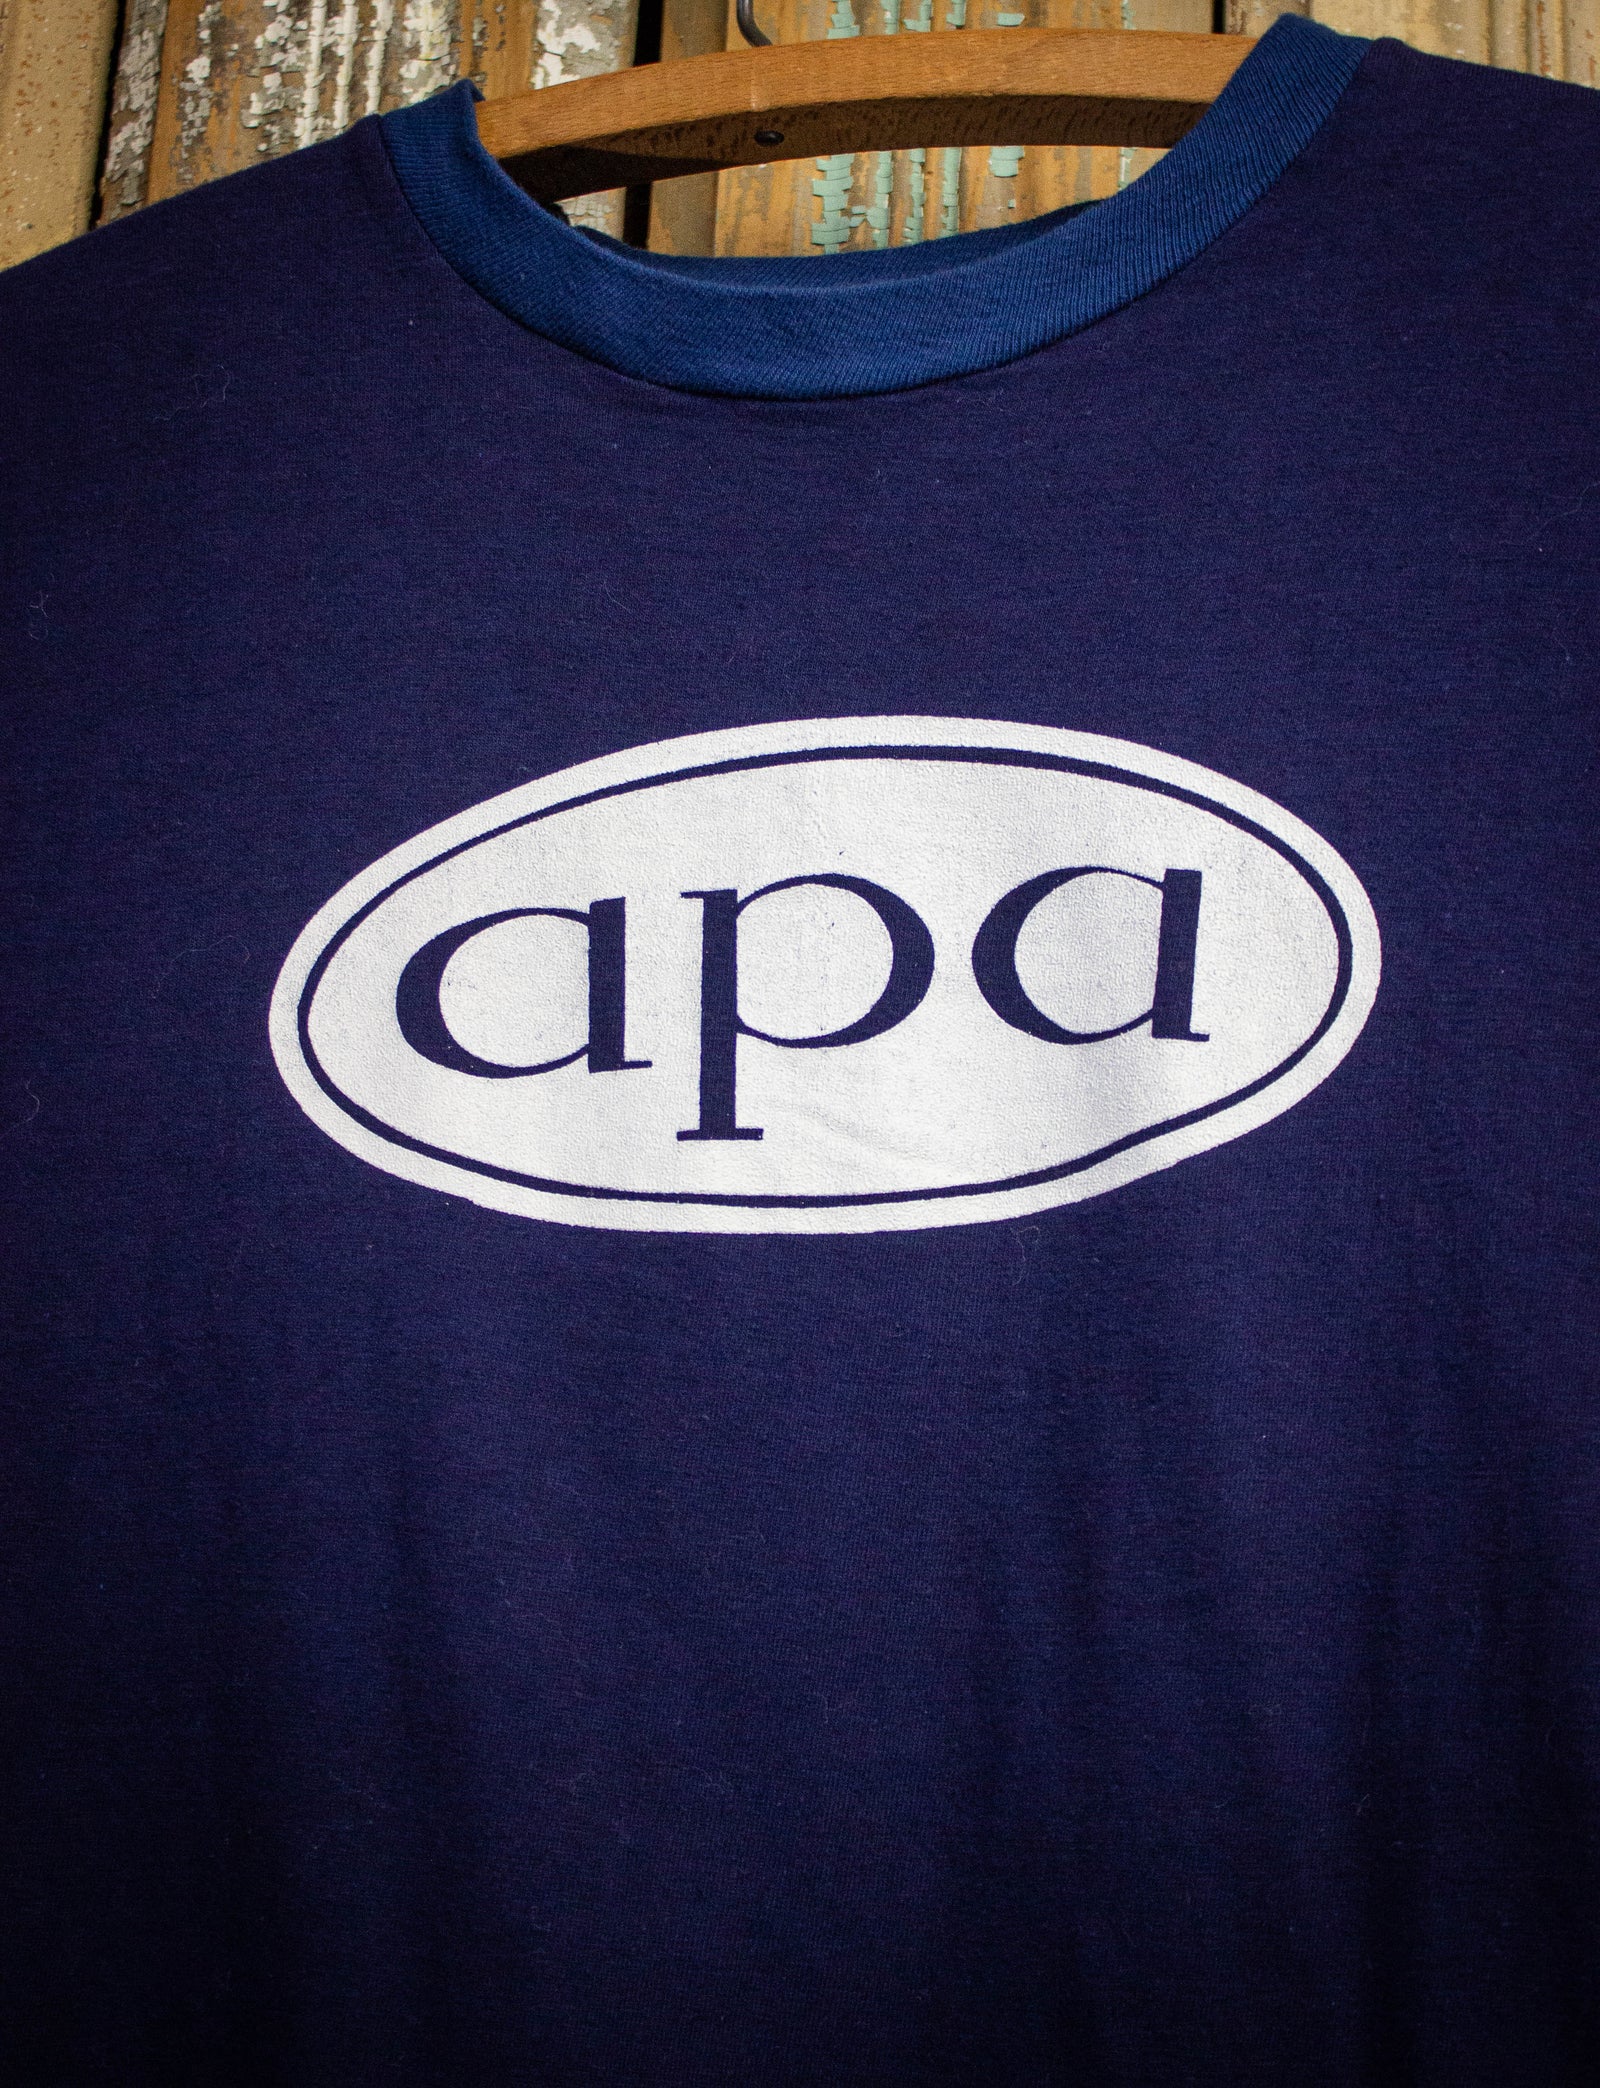 Vintage APA Crew Concert T Shirt 70s Blue Small